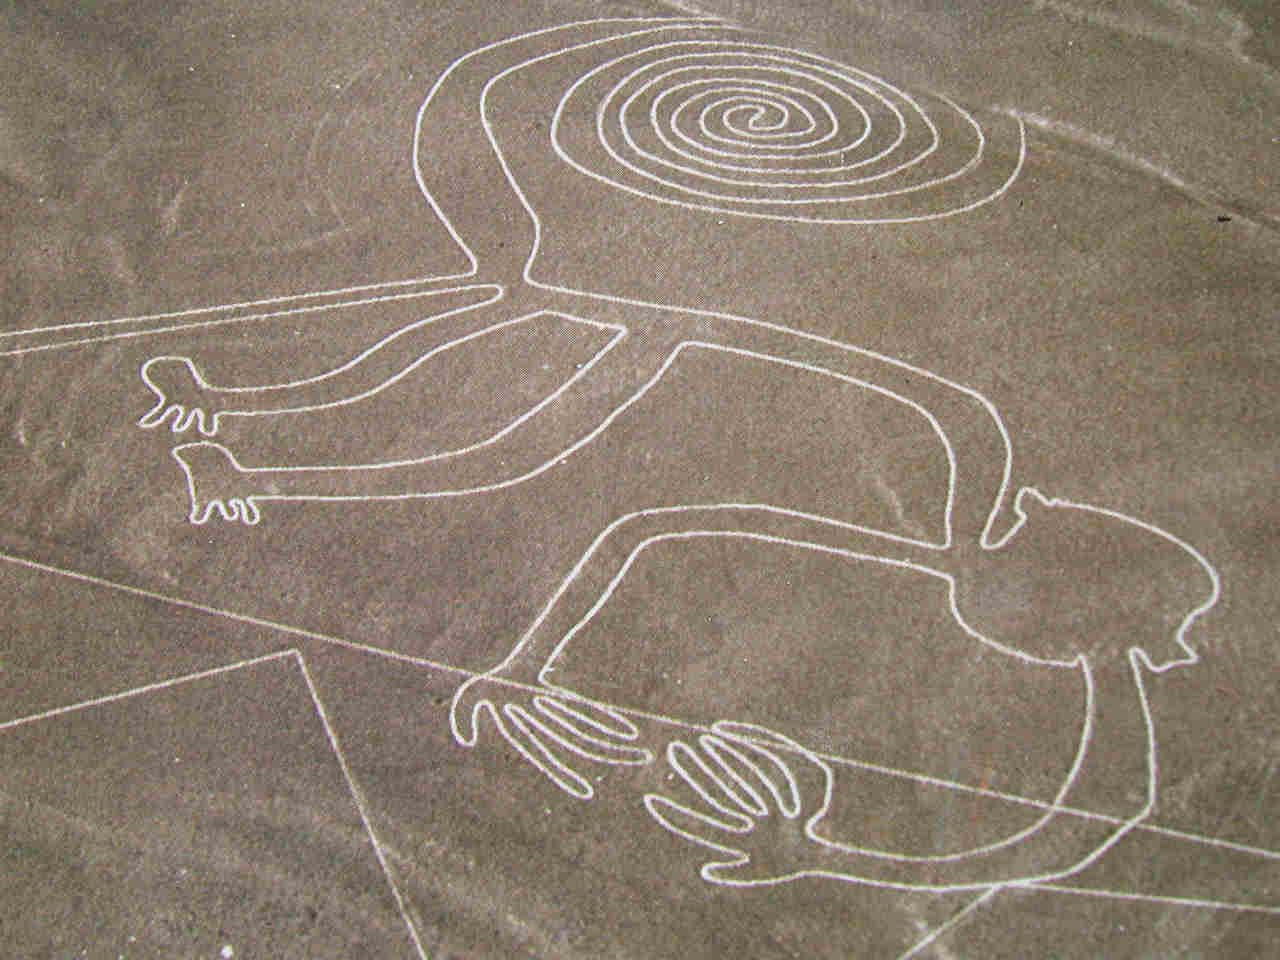 Nazca Lines - Mysterious Geoglyphs in Peru